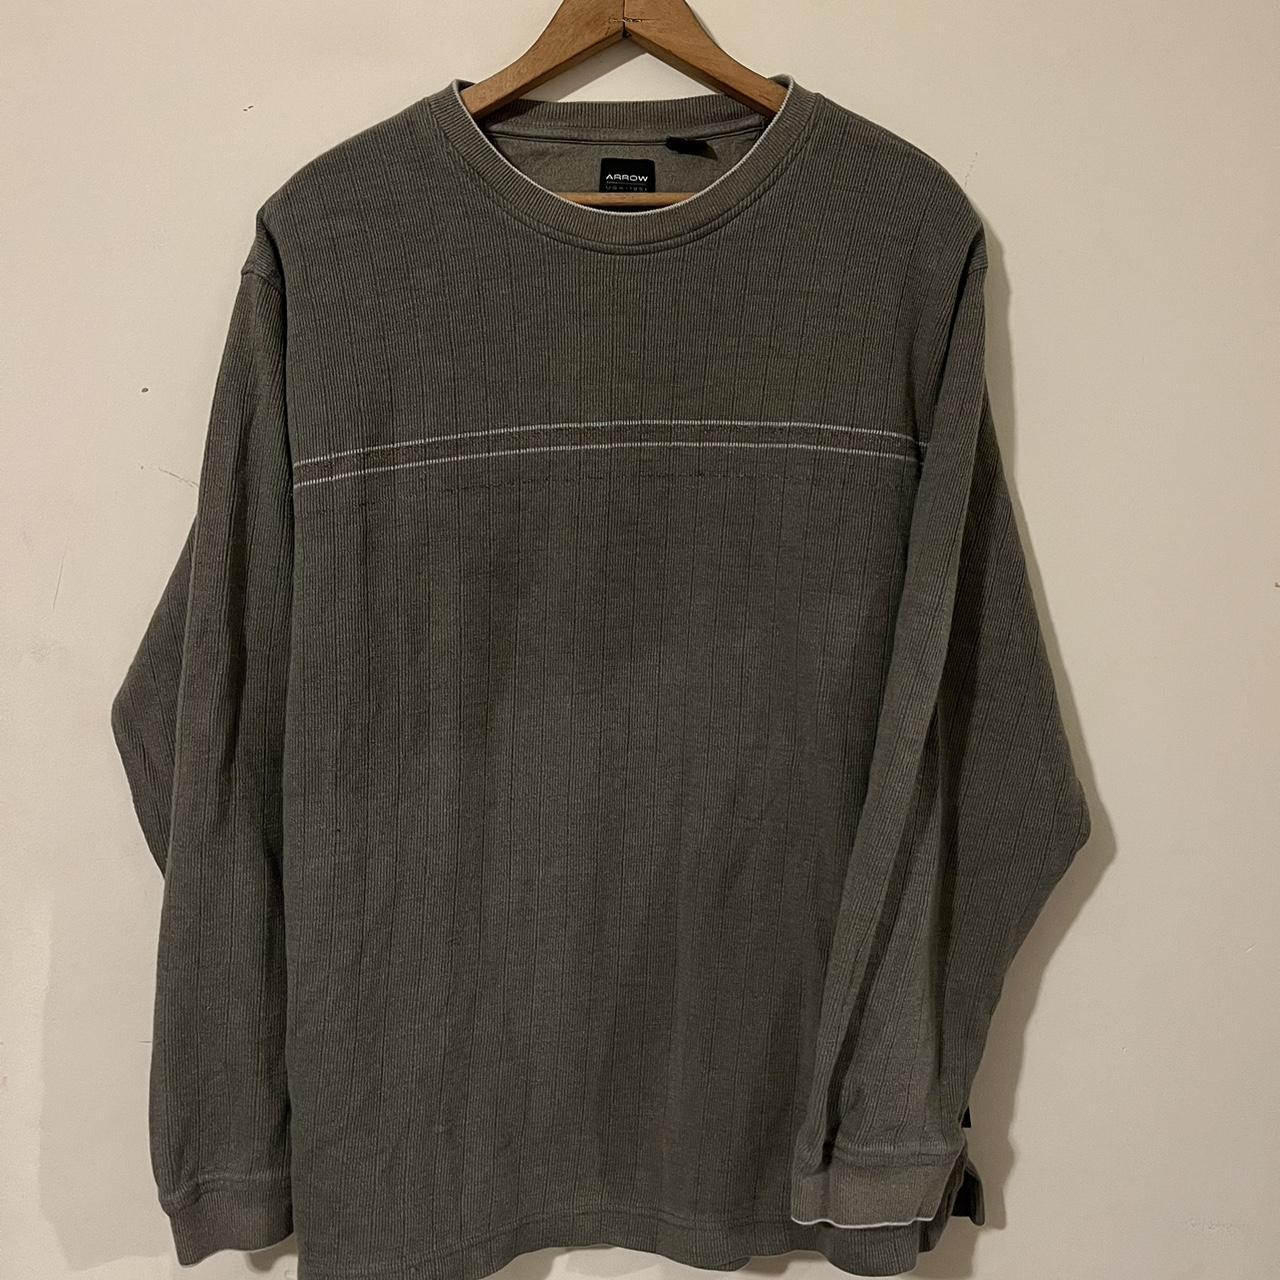 Sweater - large 🔶 - green/striped - Depop